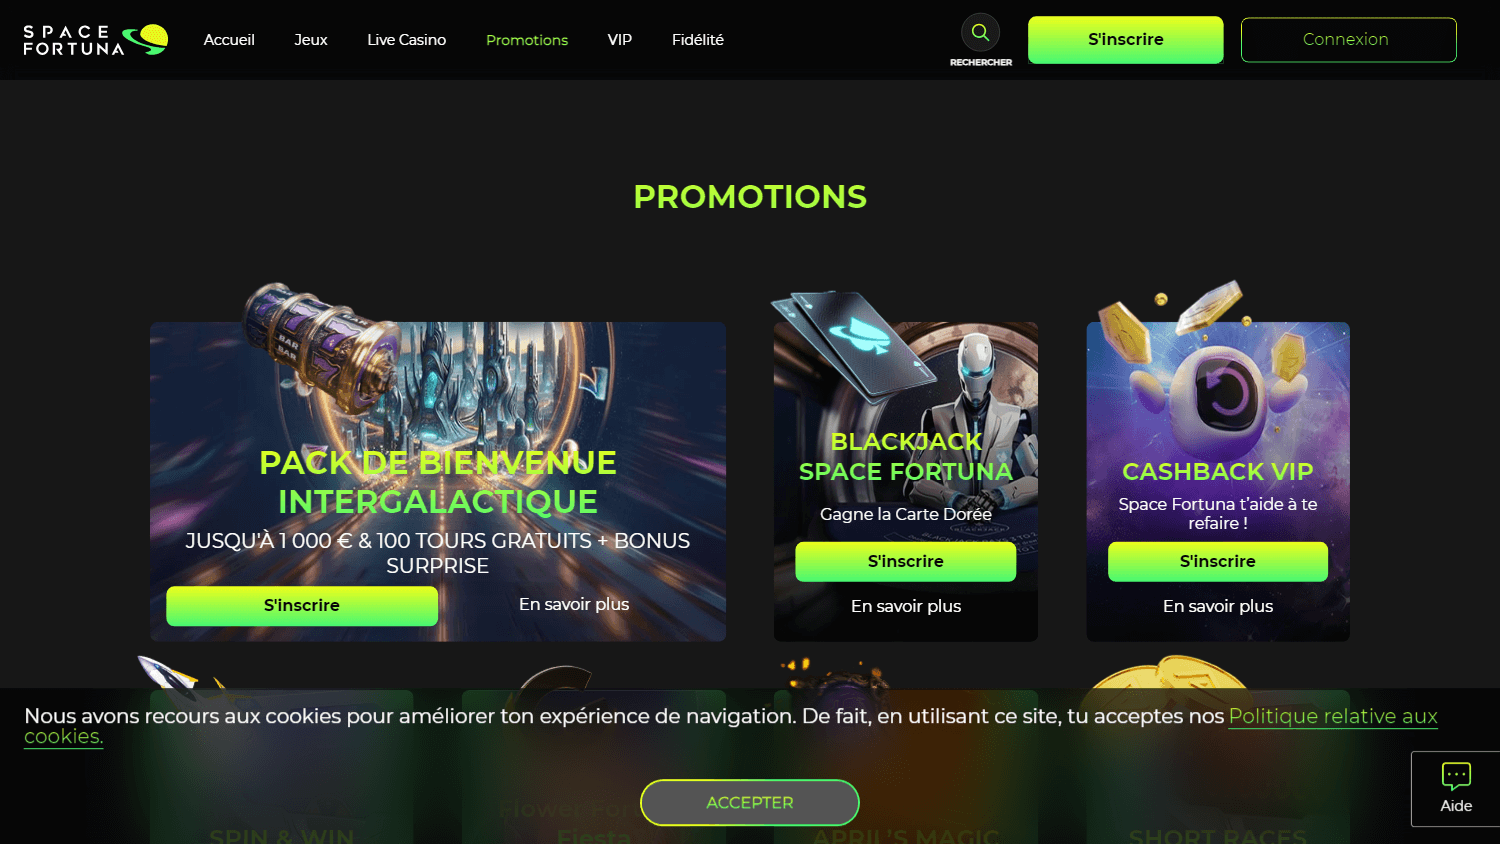 spacefortuna_casino_promotions_desktop